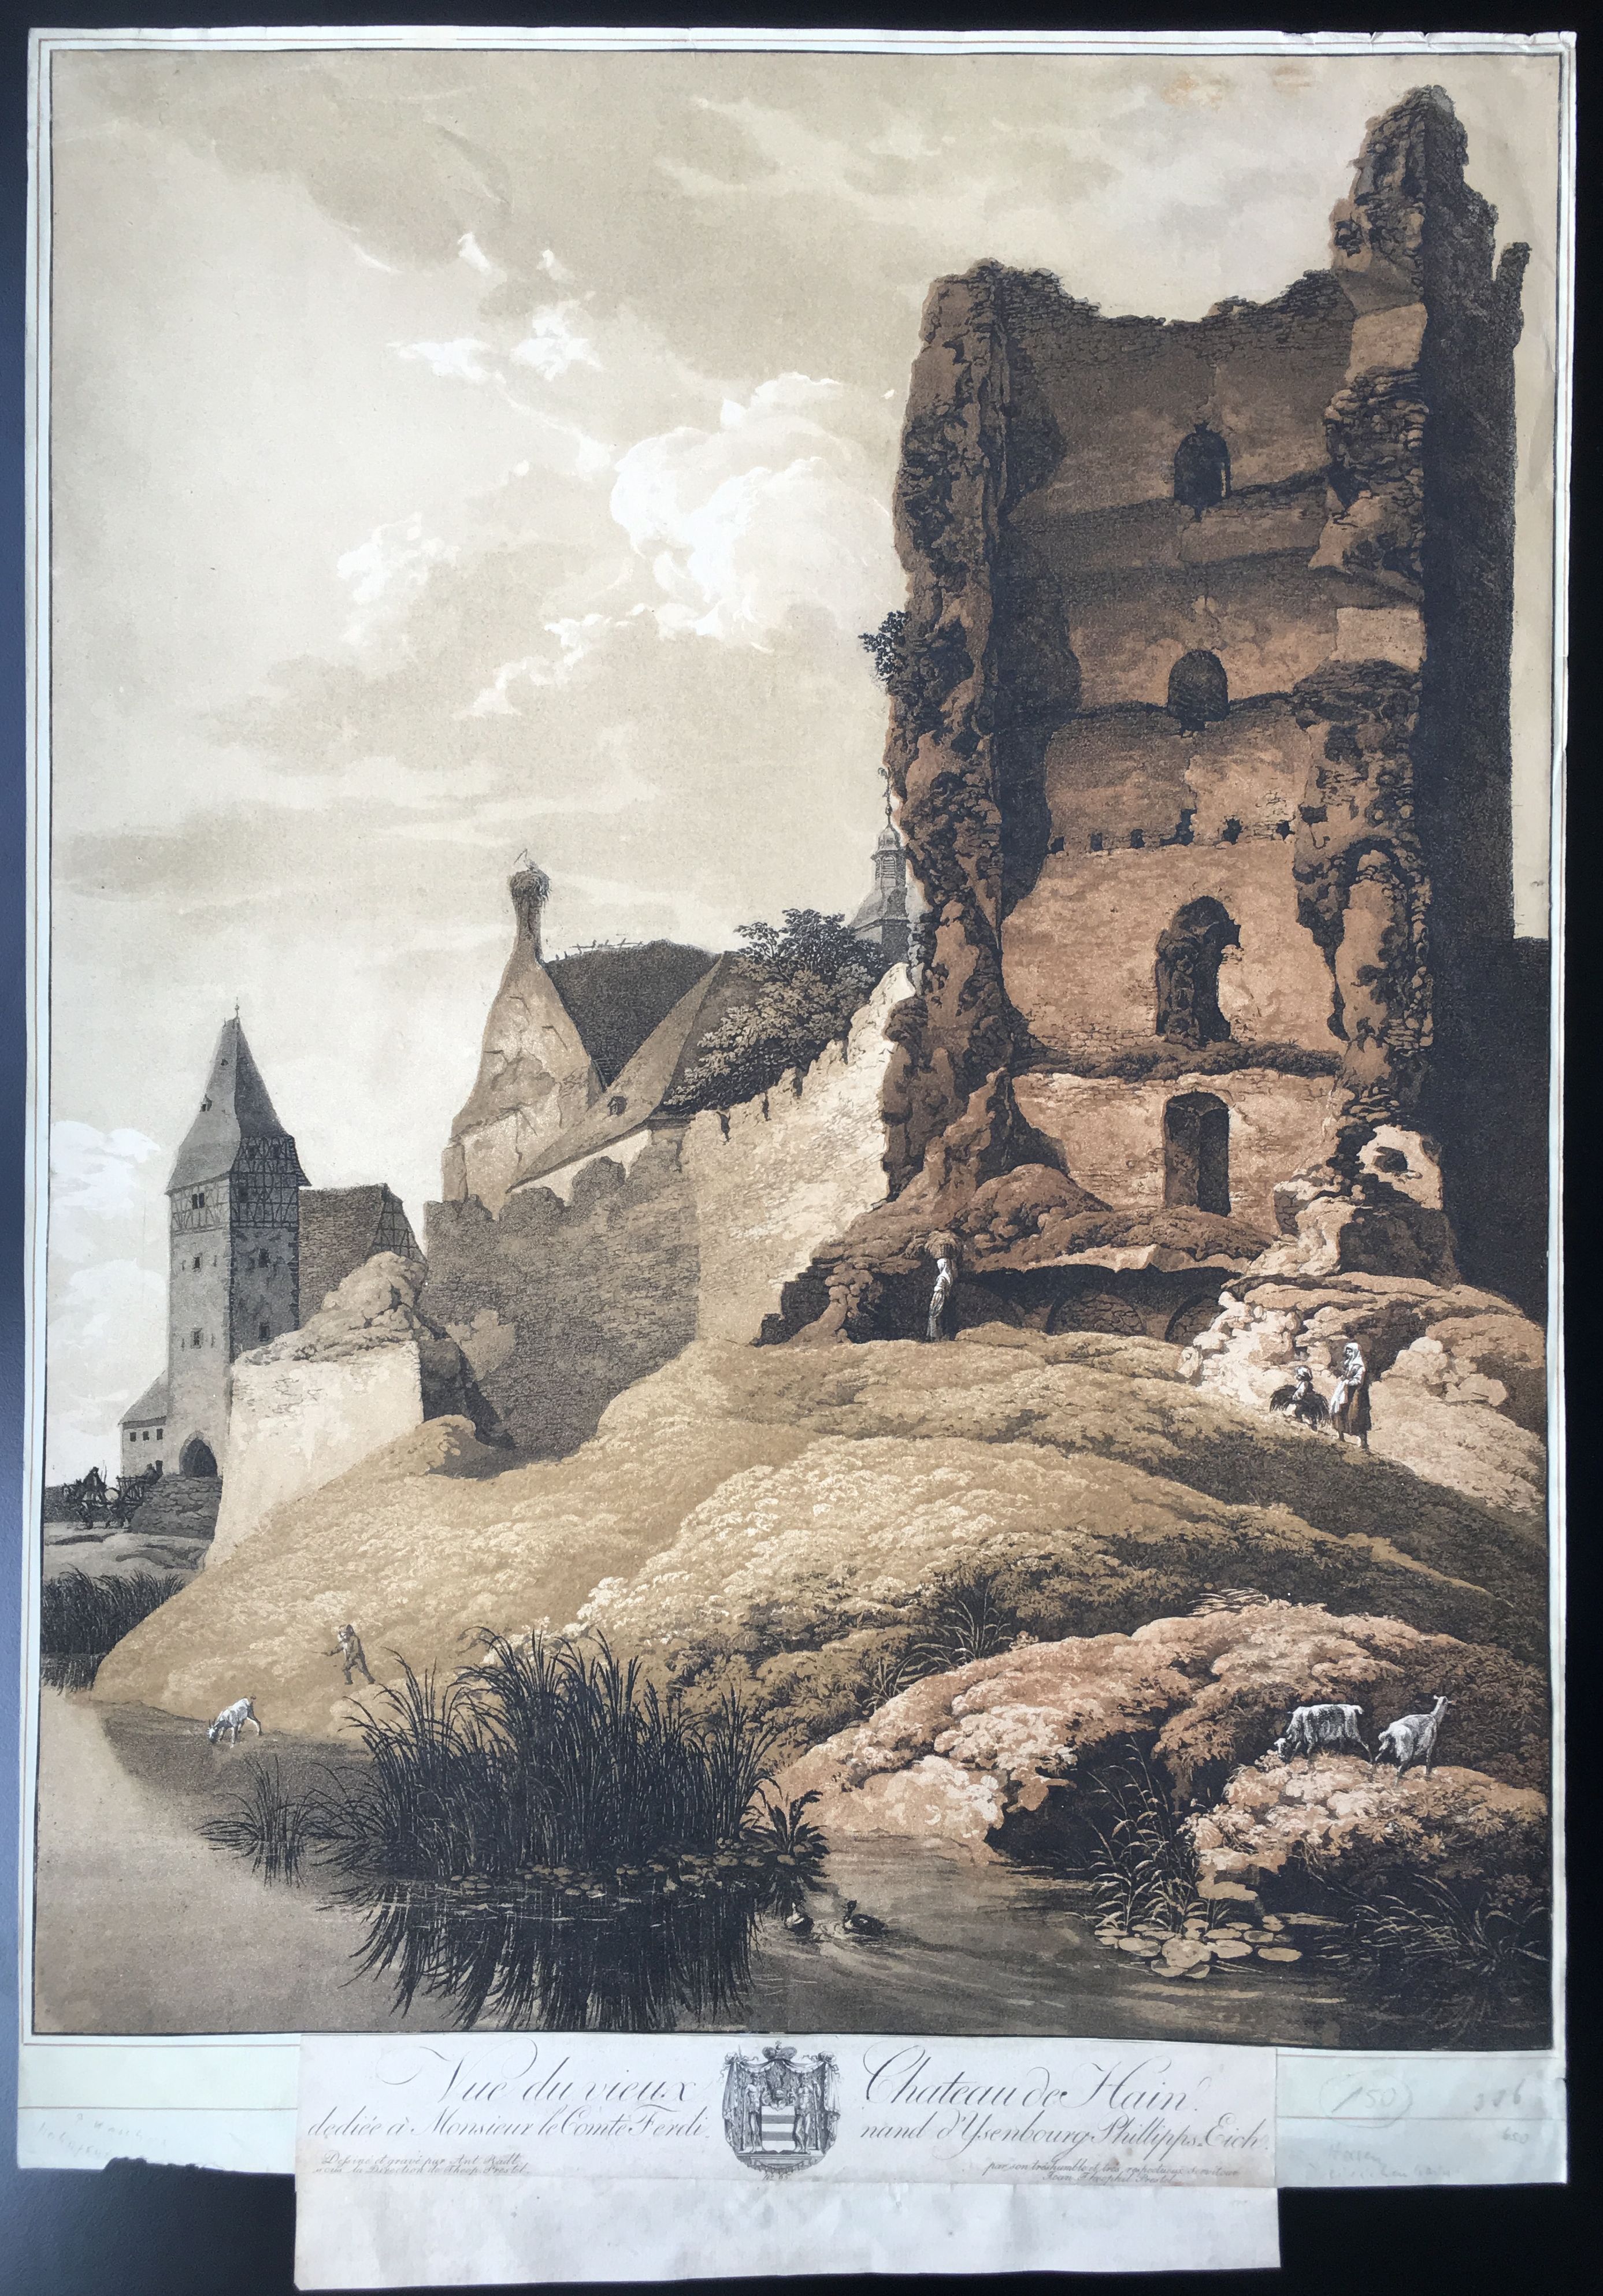 Vue du vieux Chateau de Hain, vor 1802 (Taunus-Rhein-Main - Regionalgeschichtliche Sammlung Dr. Stefan Naas CC BY-NC-SA)